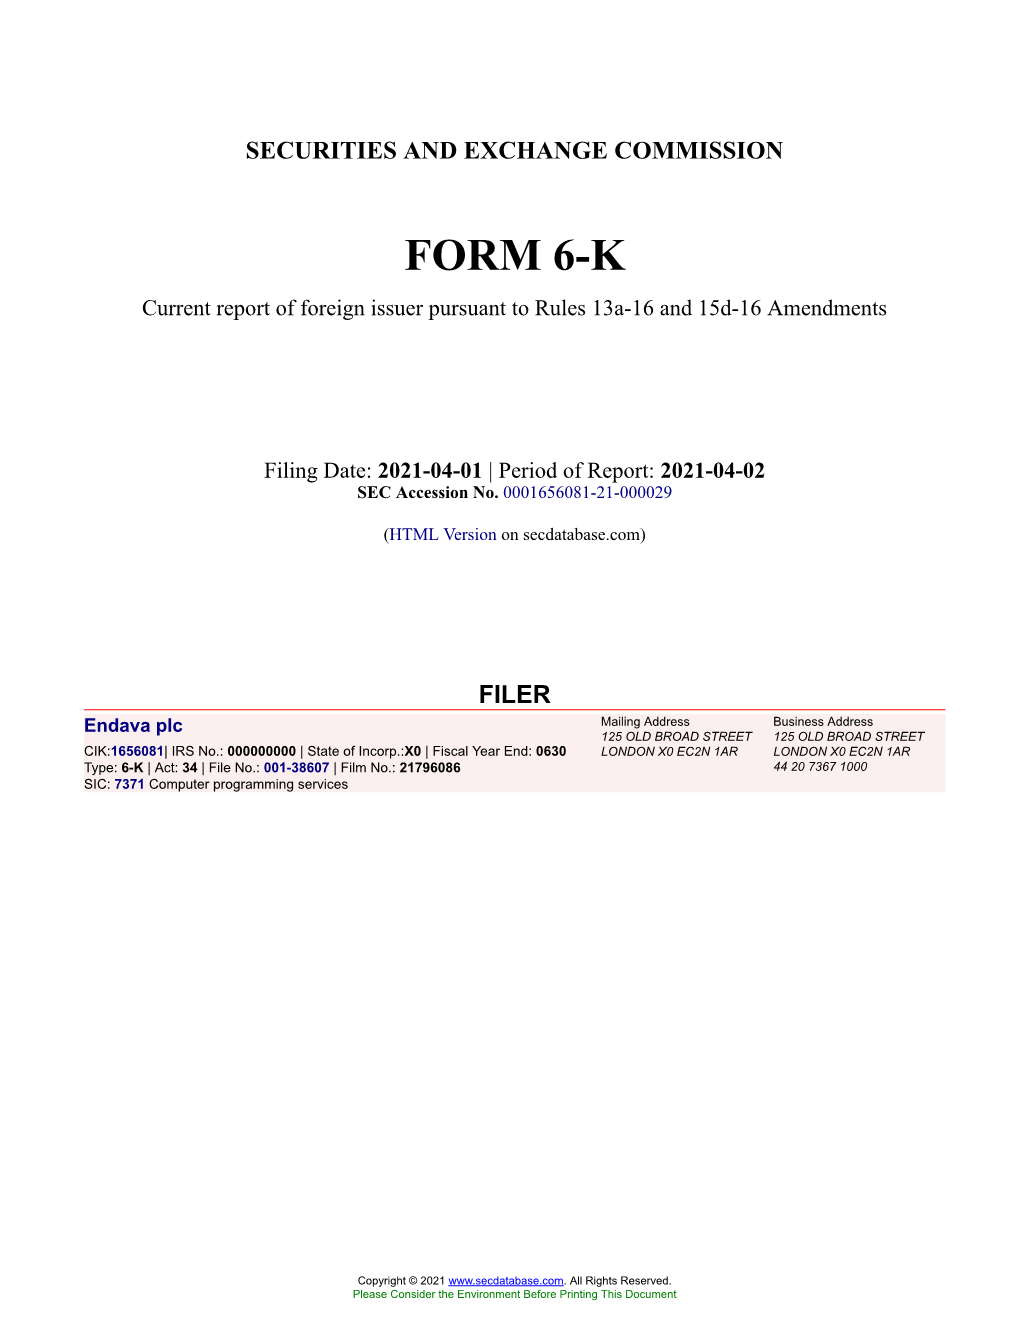 Endava Plc Form 6-K Current Event Report Filed 2021-04-01